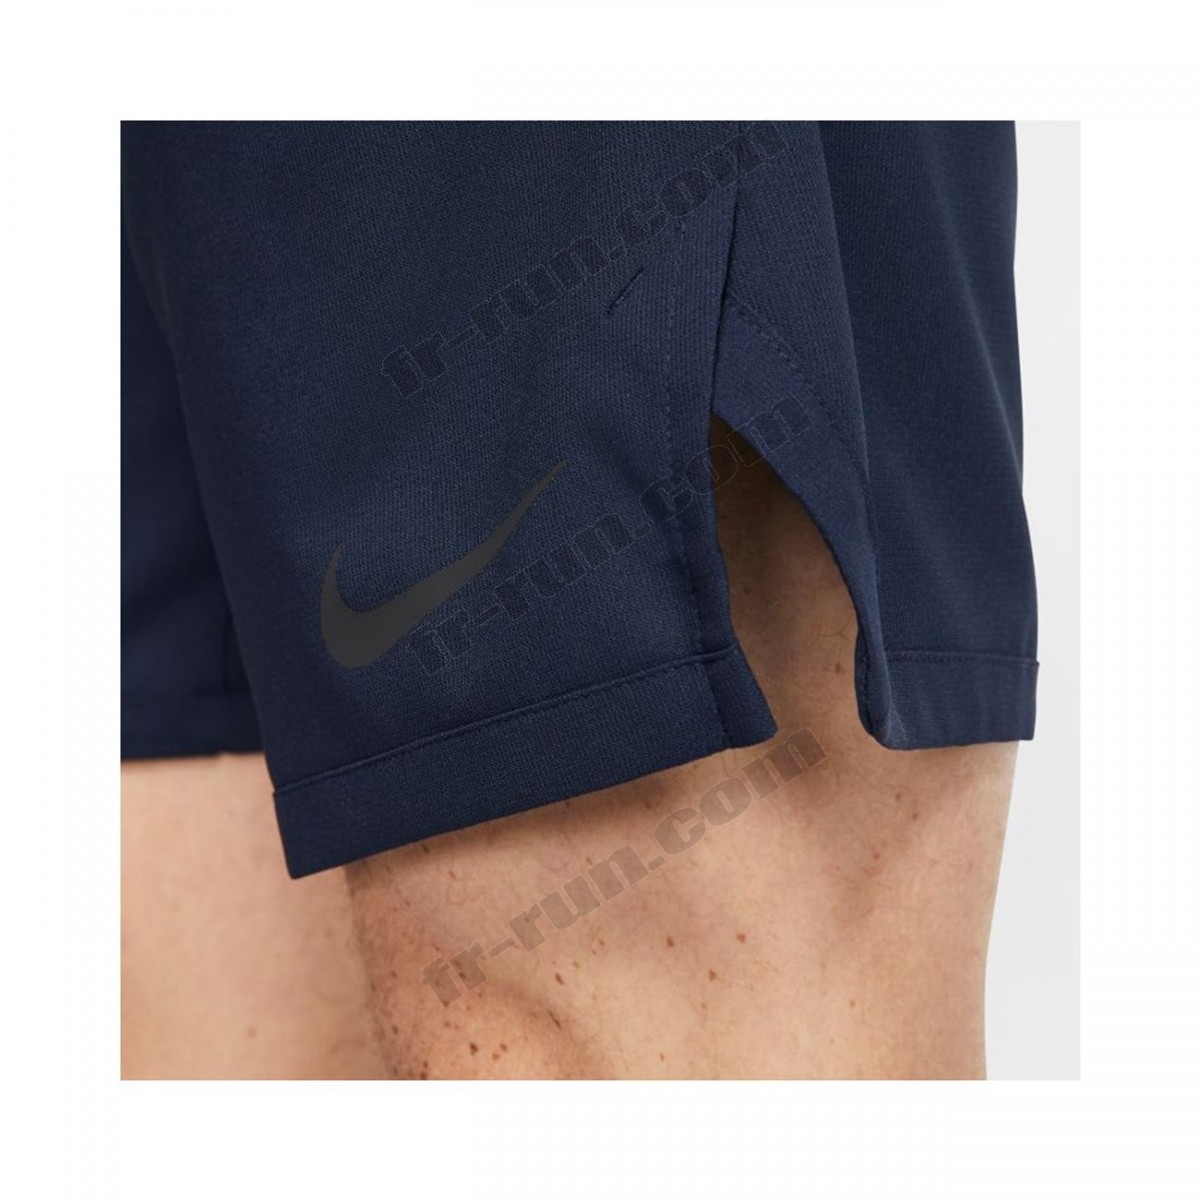 Nike/running homme NIKE Nike Pro Flex Vent Max 30 ◇◇◇ Pas Cher Du Tout - -11